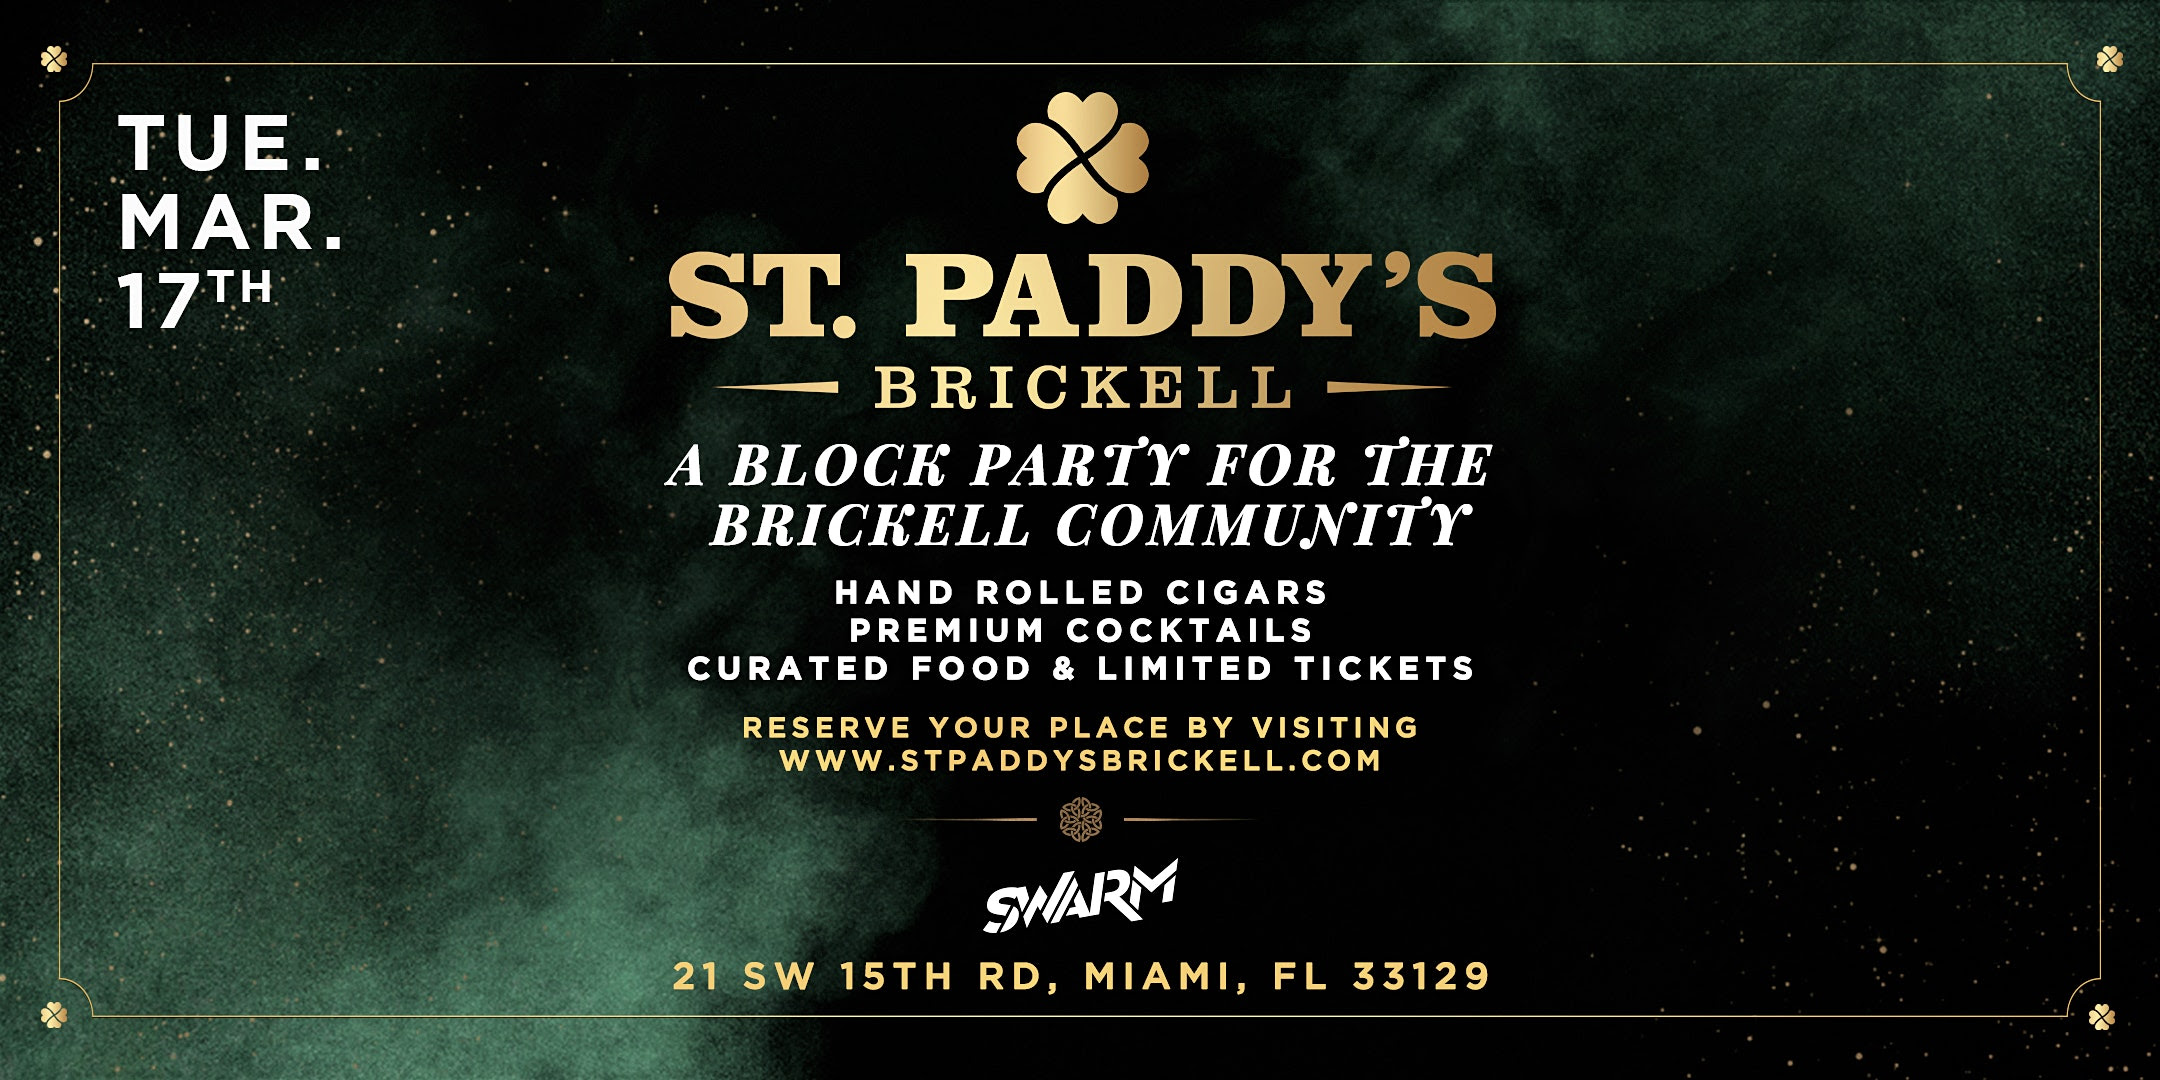 Swarm presents St. Paddys Brickell